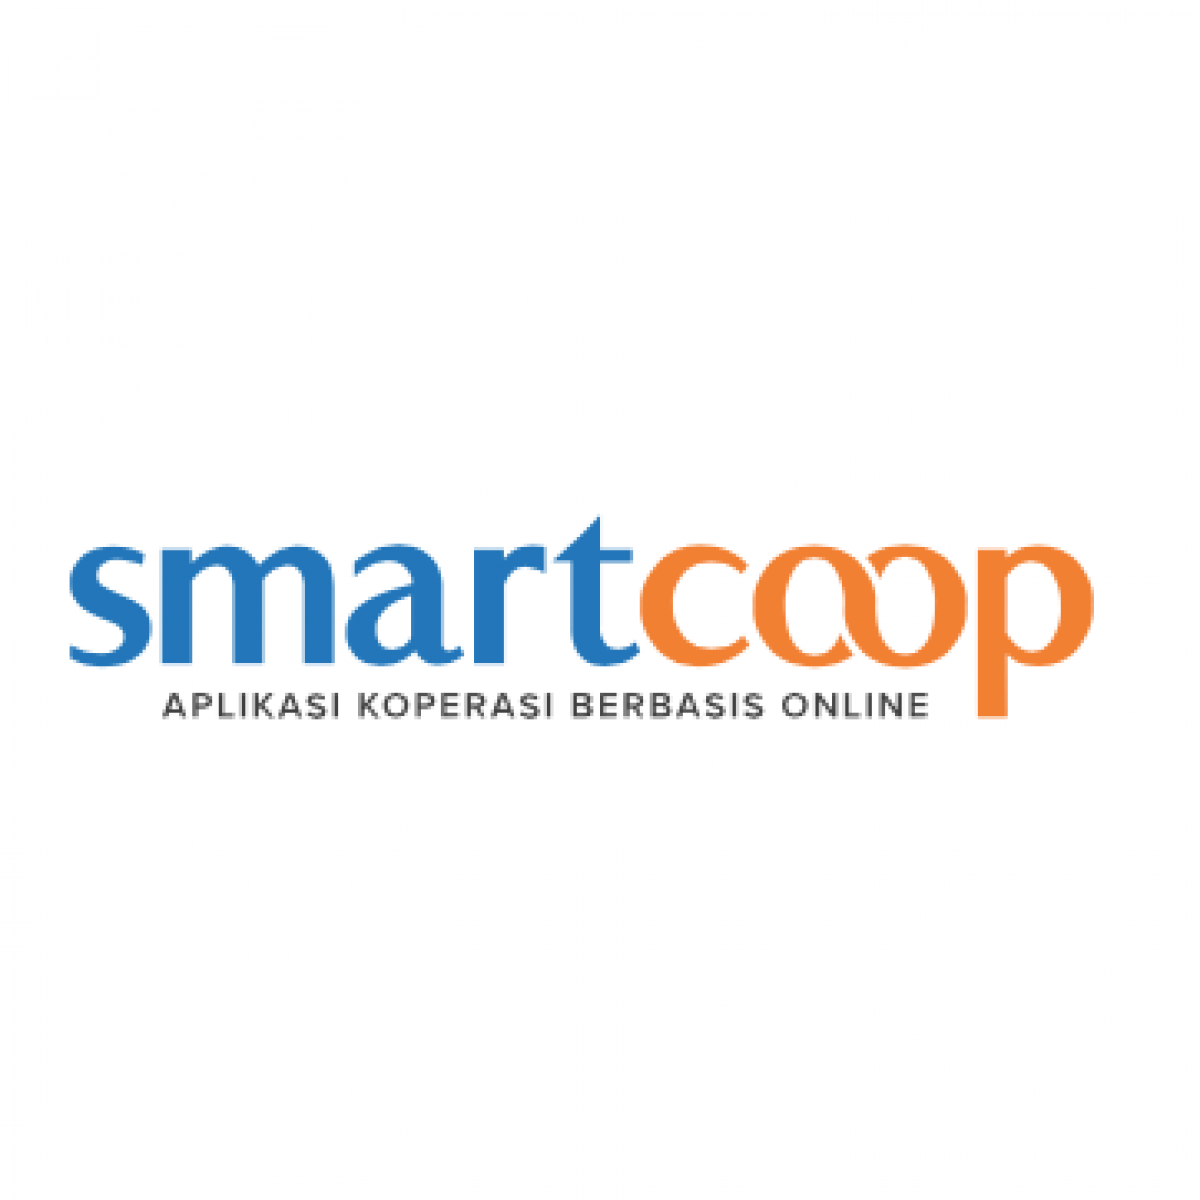 Smartcoop - Aplikasi Koperasi